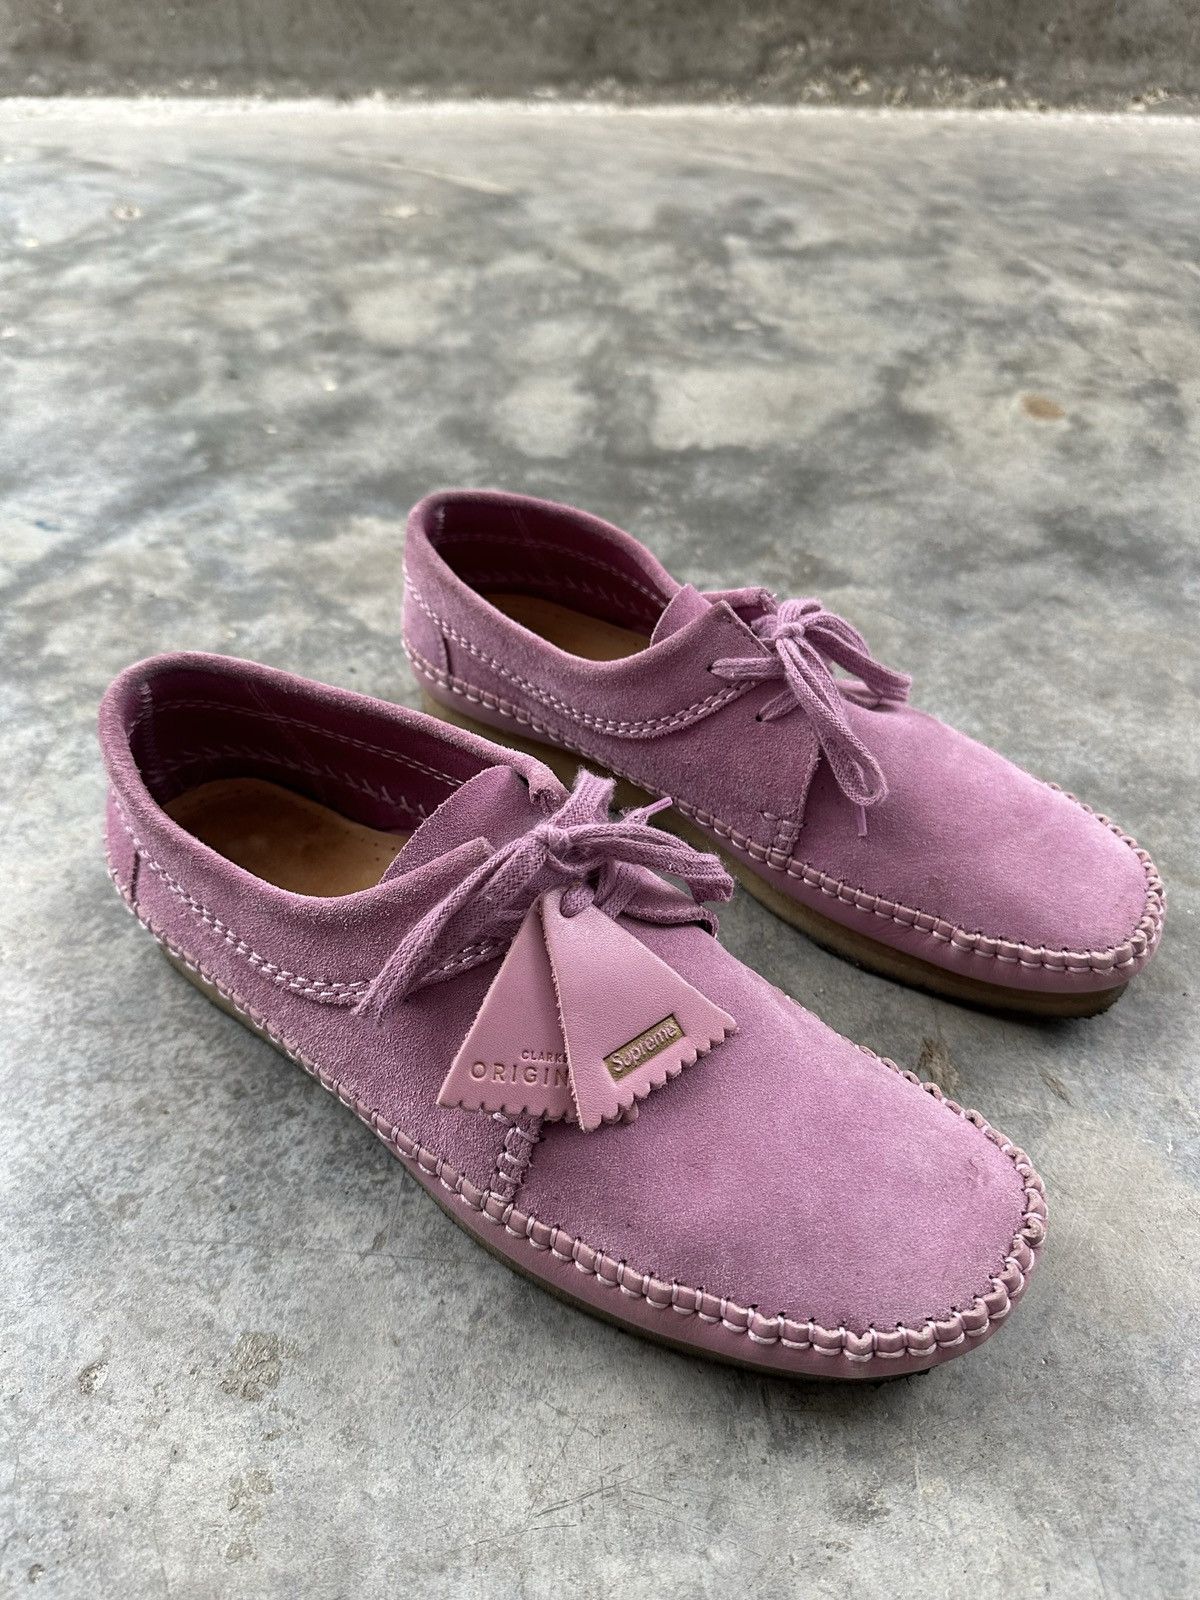 Supreme Supreme x Clarks Weaver Low Lavender / Pink Suede Shoes 11.5 |  Grailed